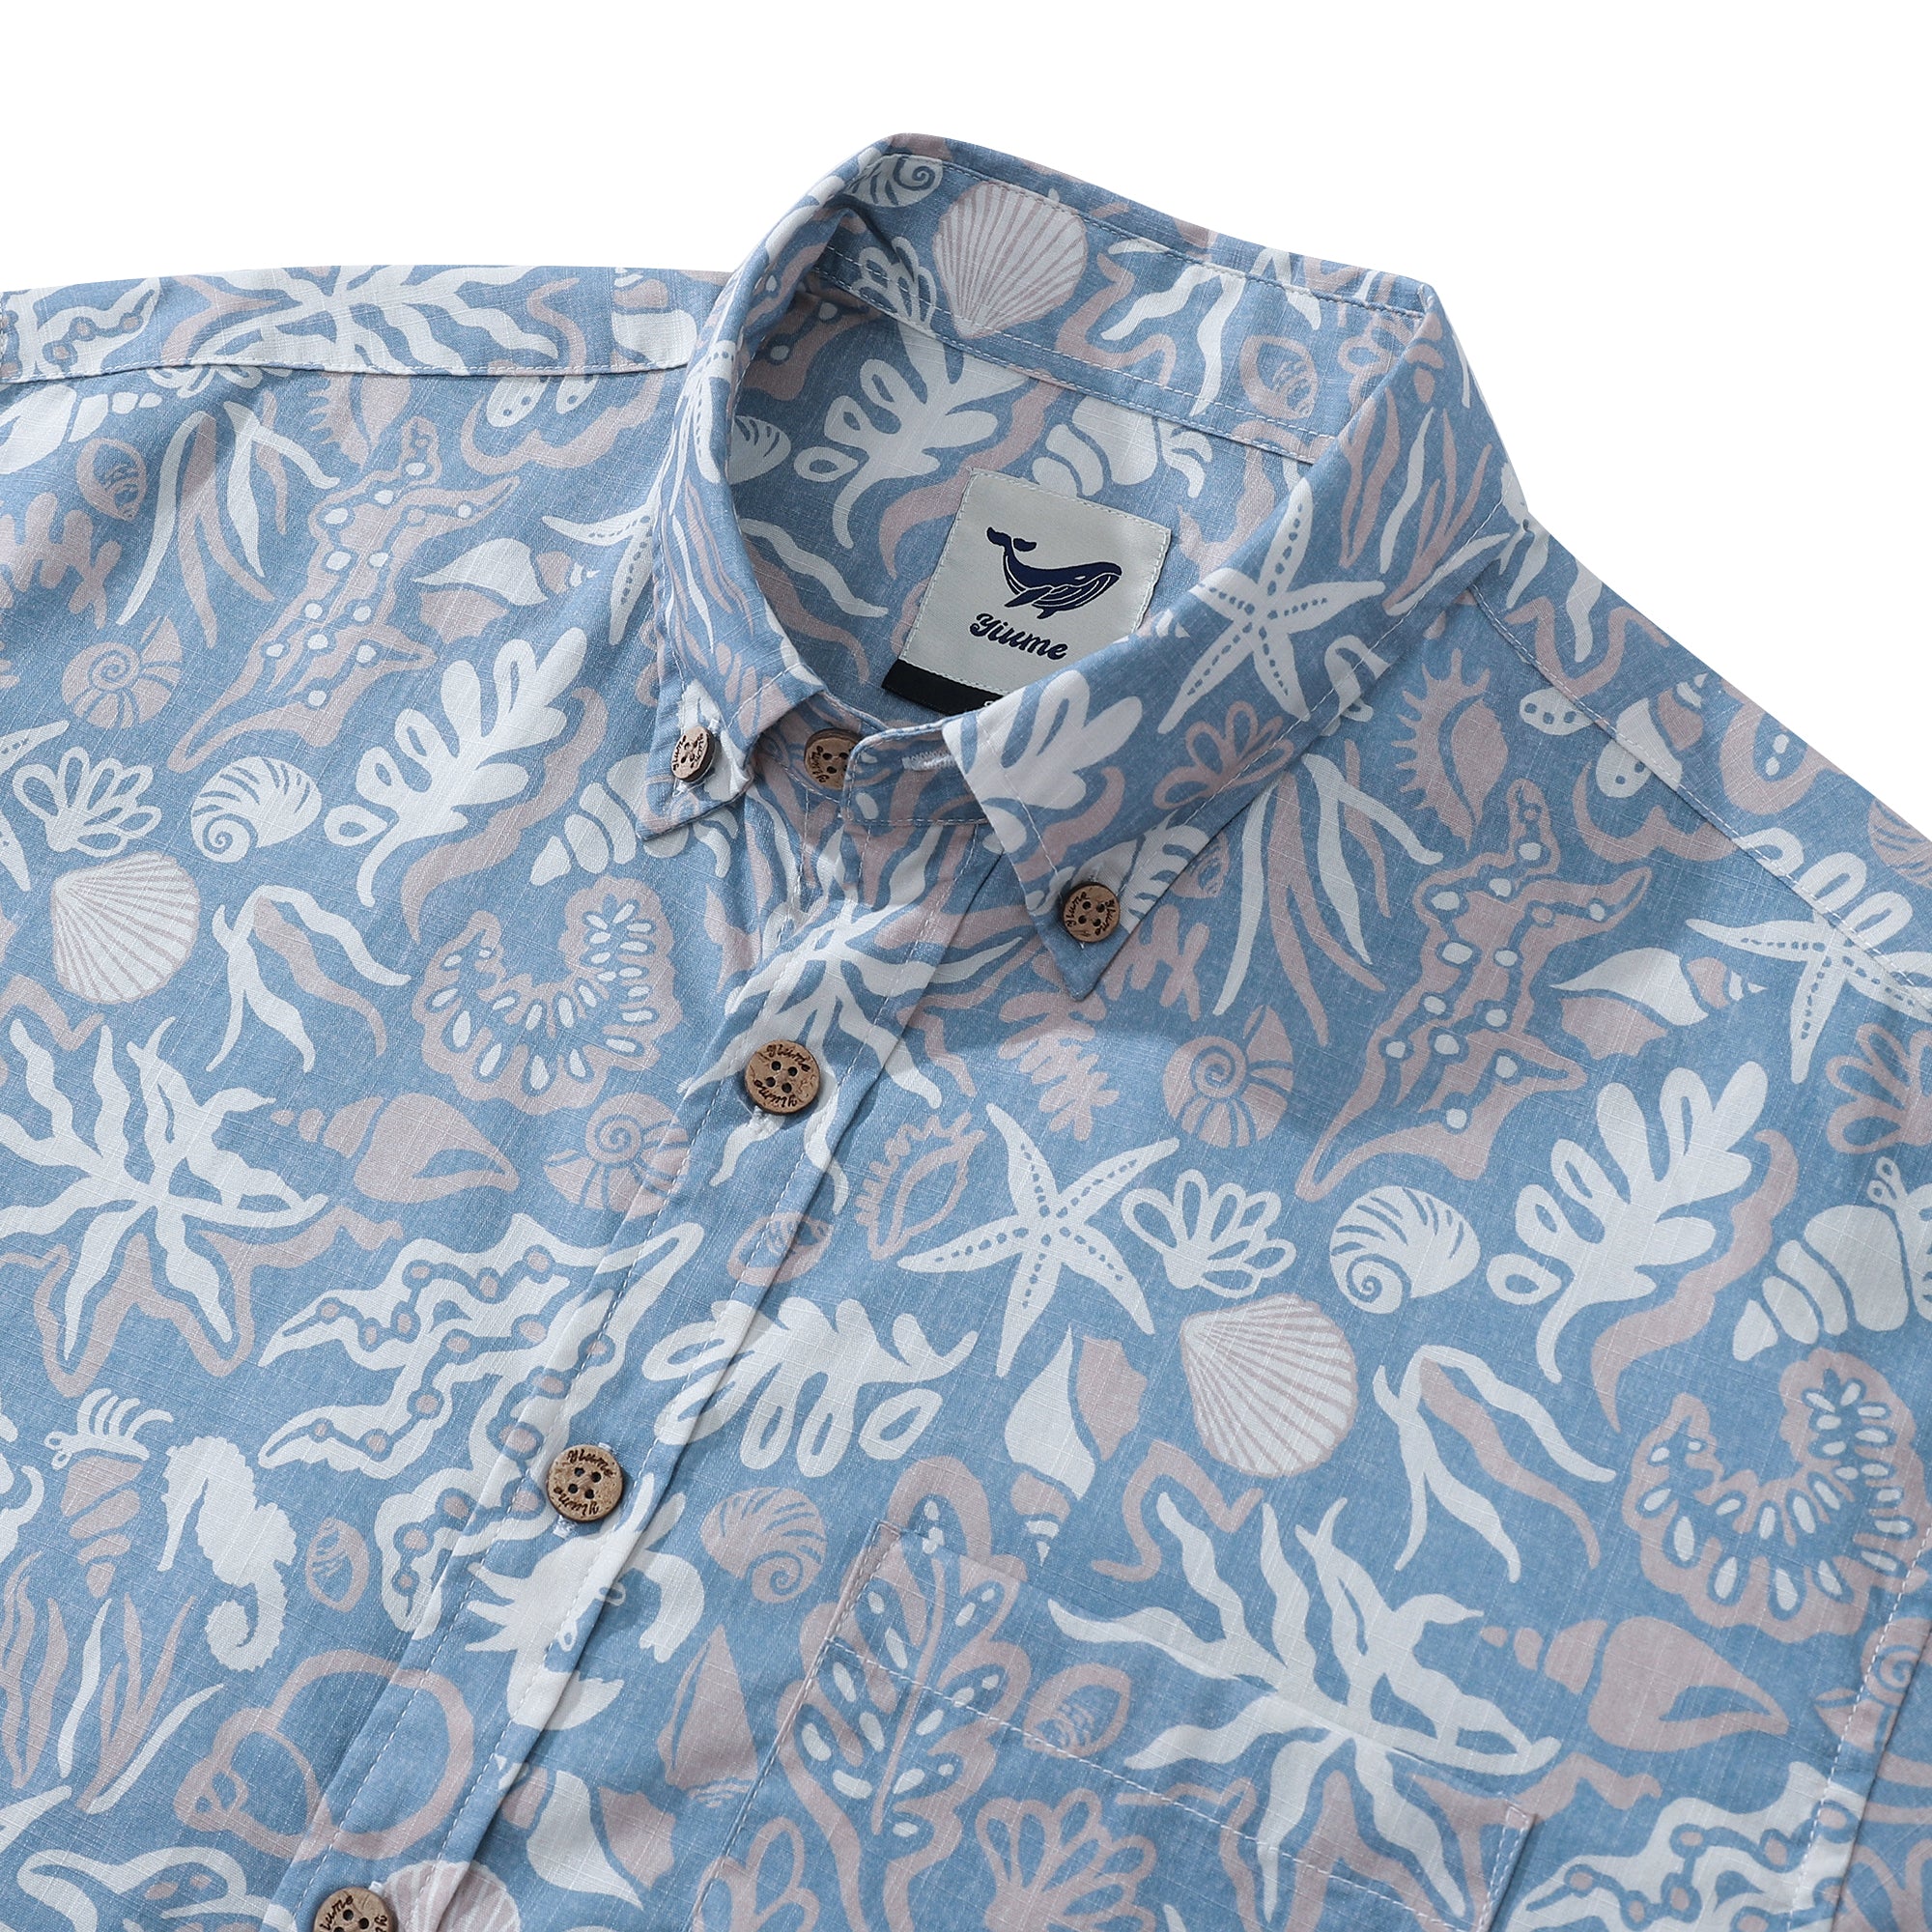 Yiume Hawaiian Shirts for Men Oceanic Silhouette Print 100% Cotton Short-Sleeved - Blue